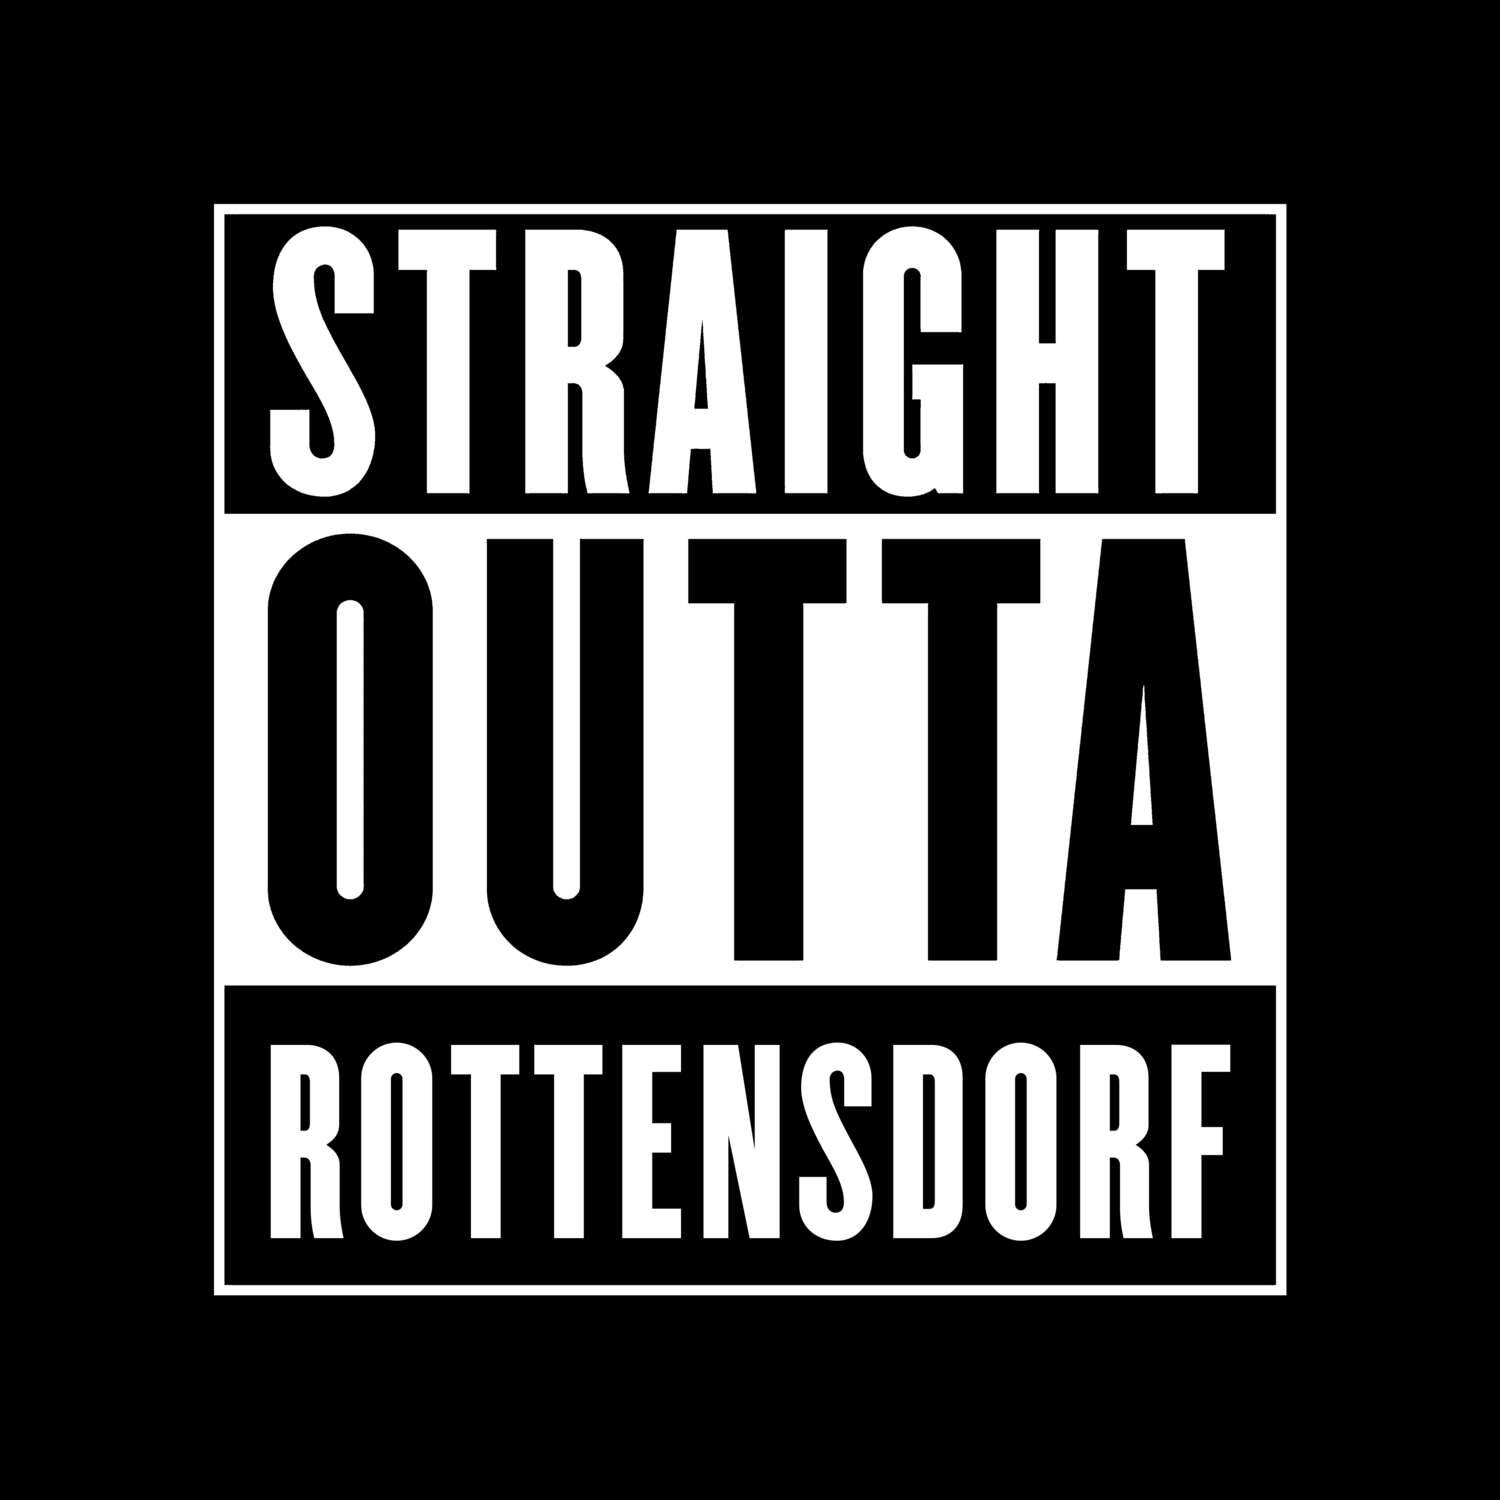 Rottensdorf T-Shirt »Straight Outta«